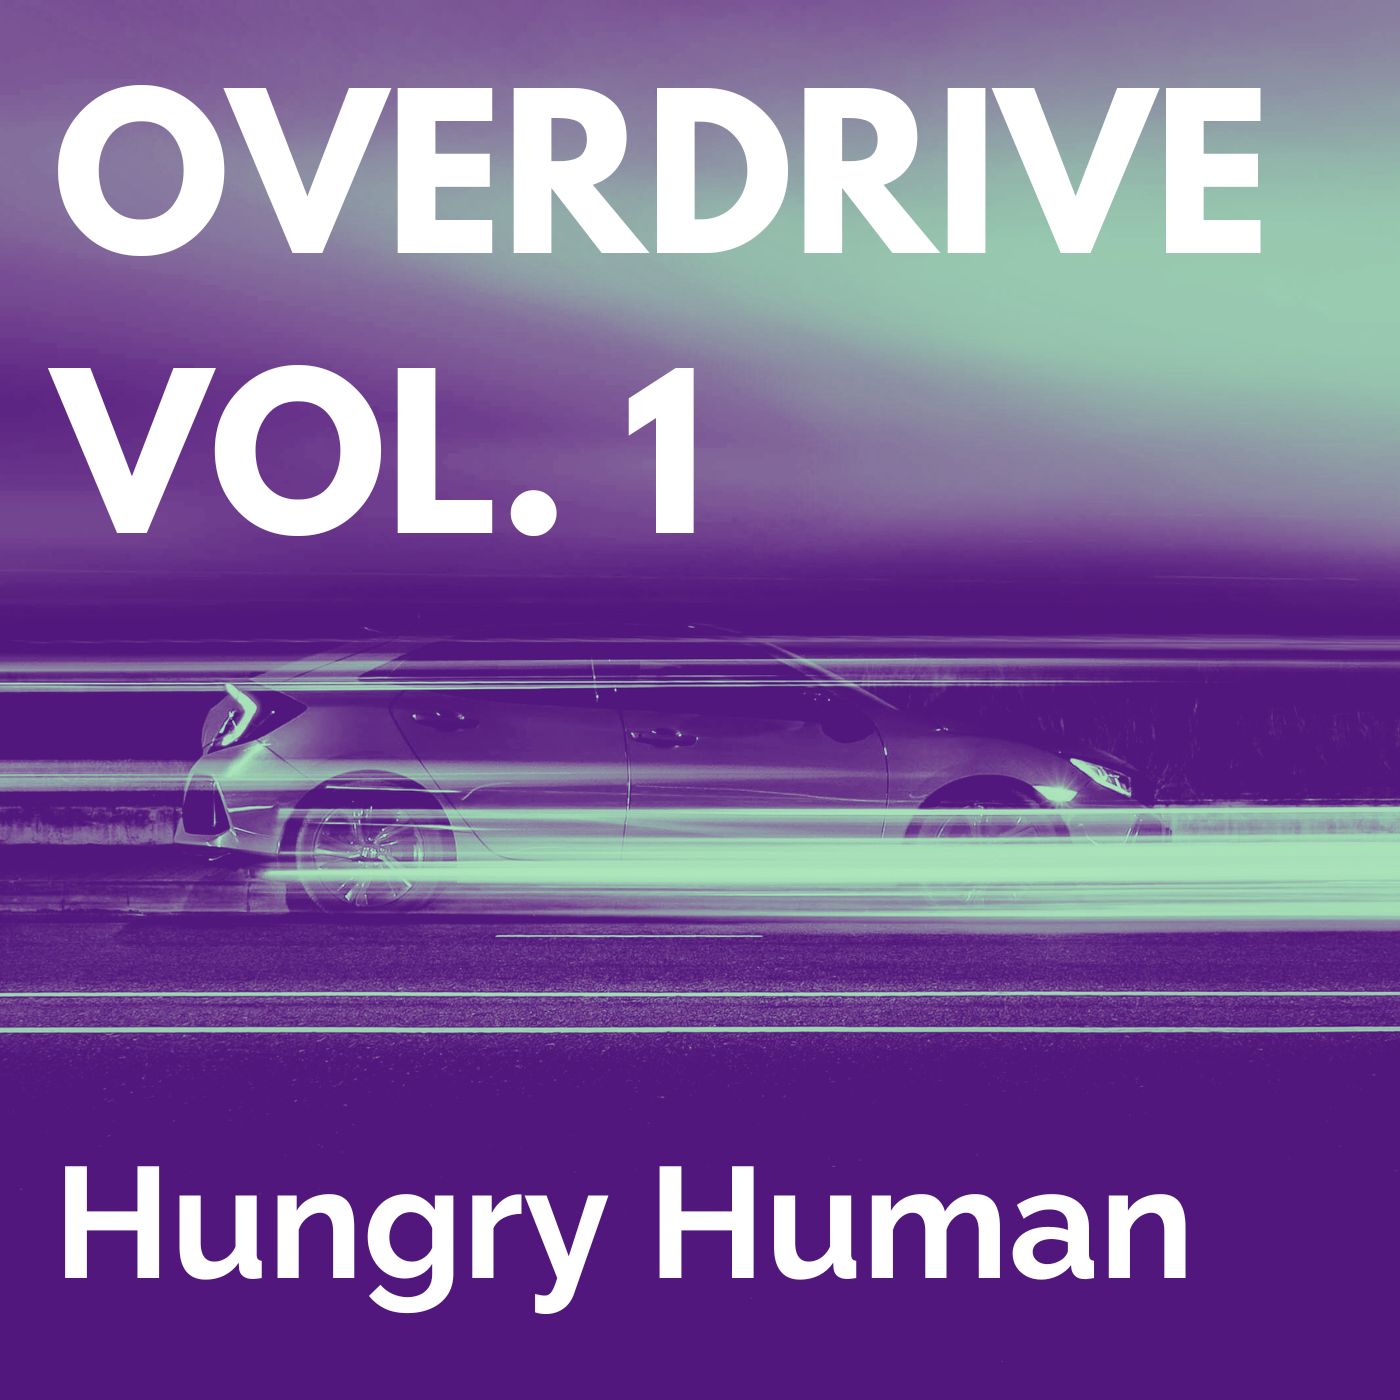 Hungry Human Overdrive V1 Album Cover Art